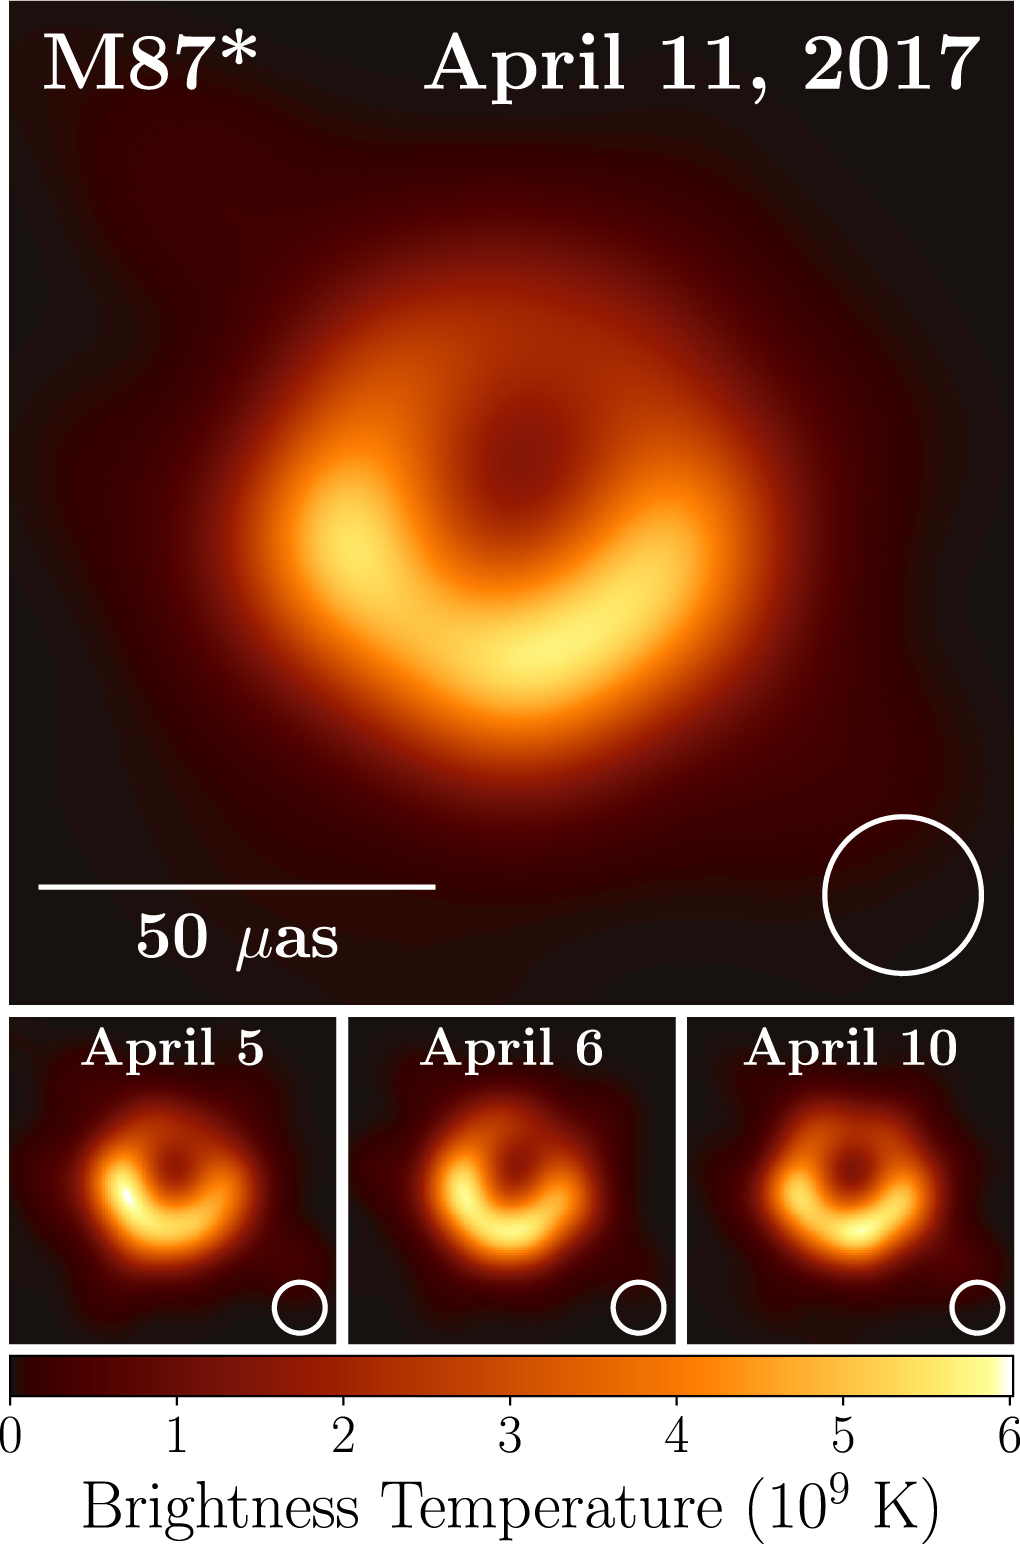 M87 black hole imaged by the Event Horizon Telescope